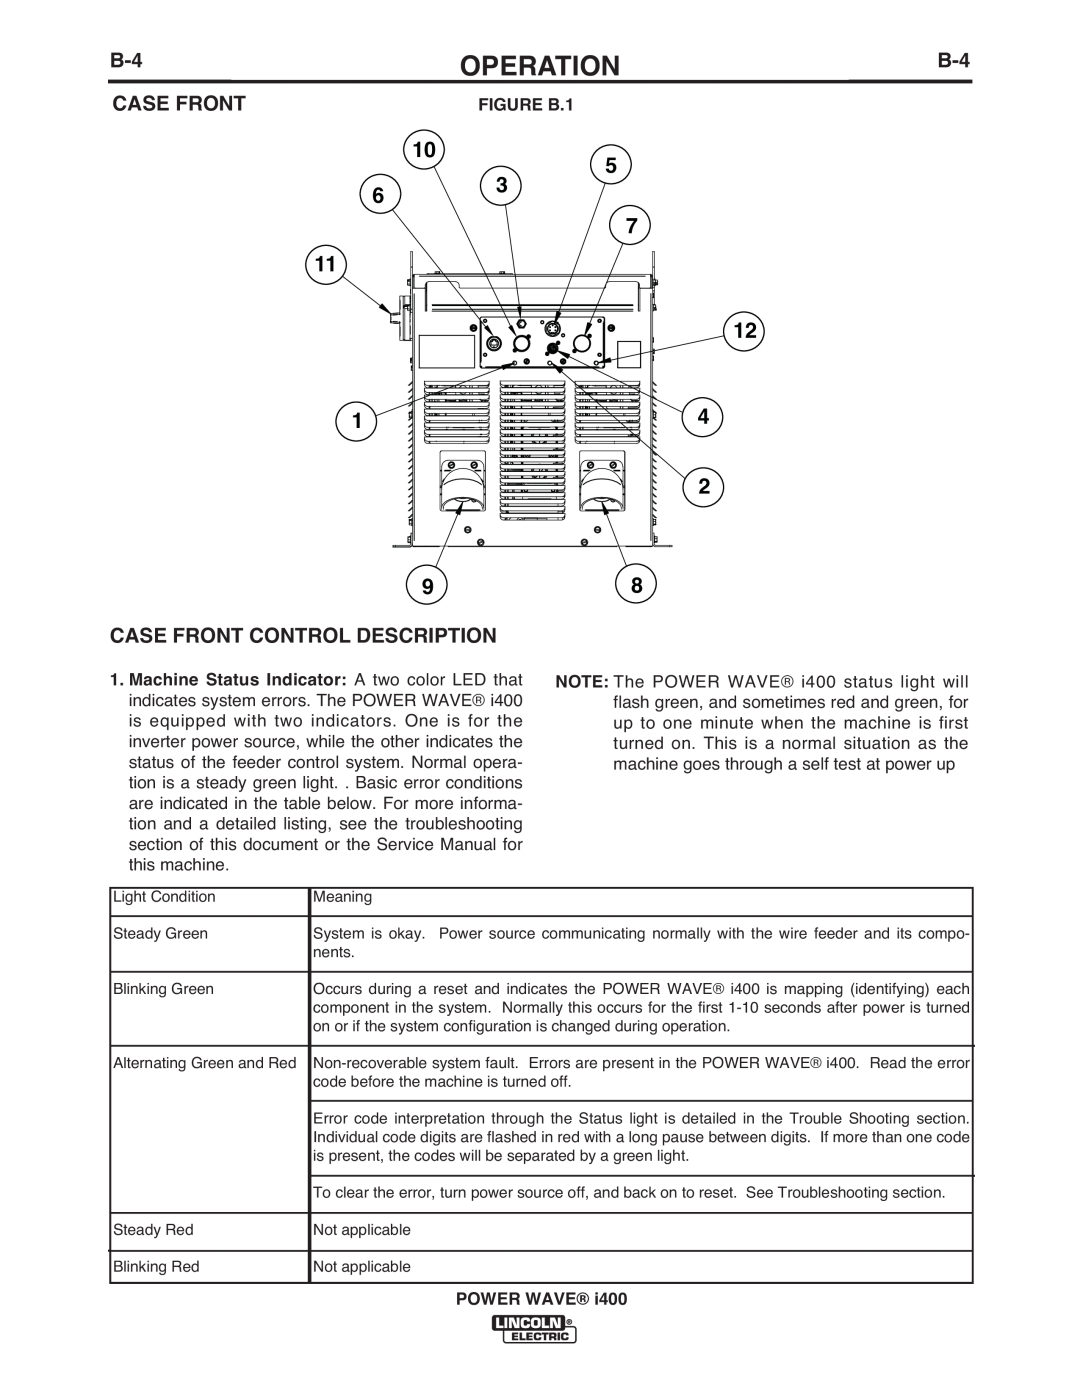 Lincoln Electric IM986 manual Case Front Control Description, Operation 